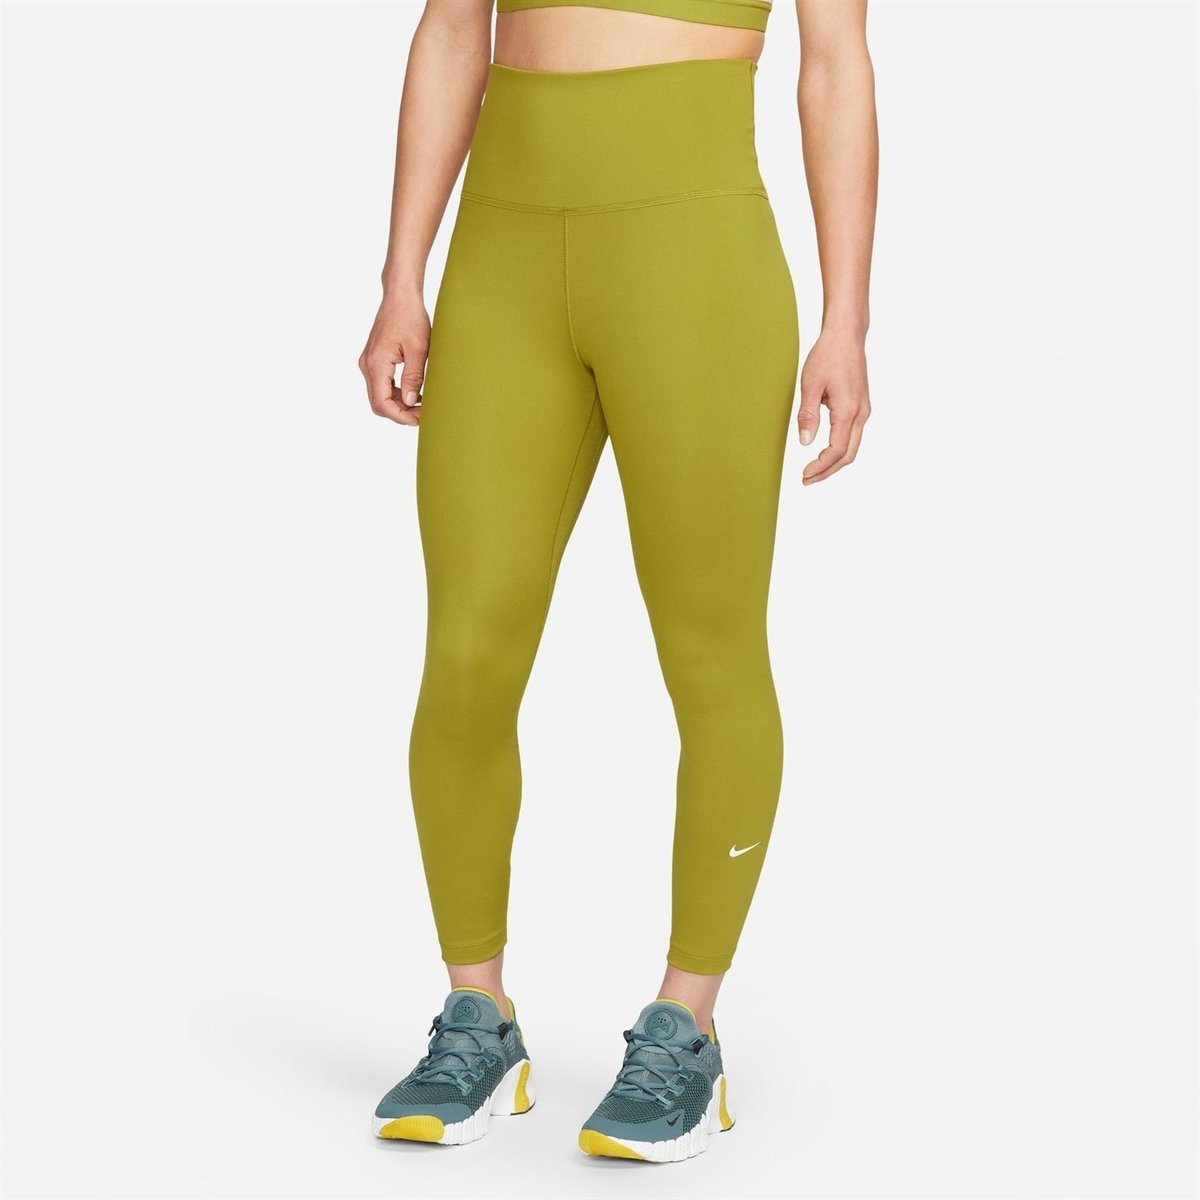 Nike Running Clothing - Lovell Sports - all